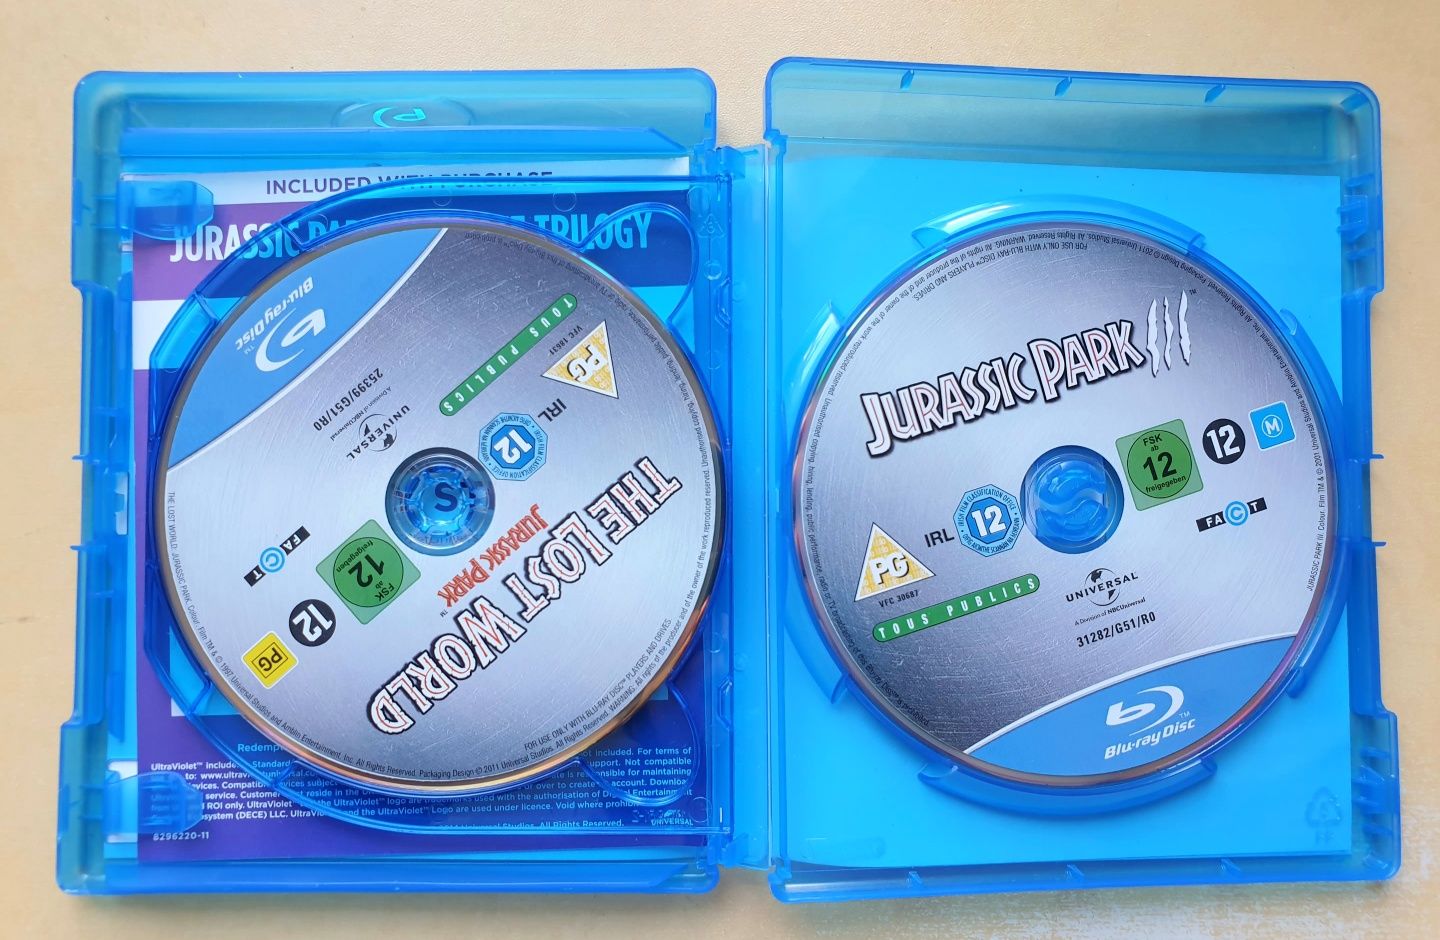 Film Blu Ray DVD jurassic park world ultimate collection park jurajsk